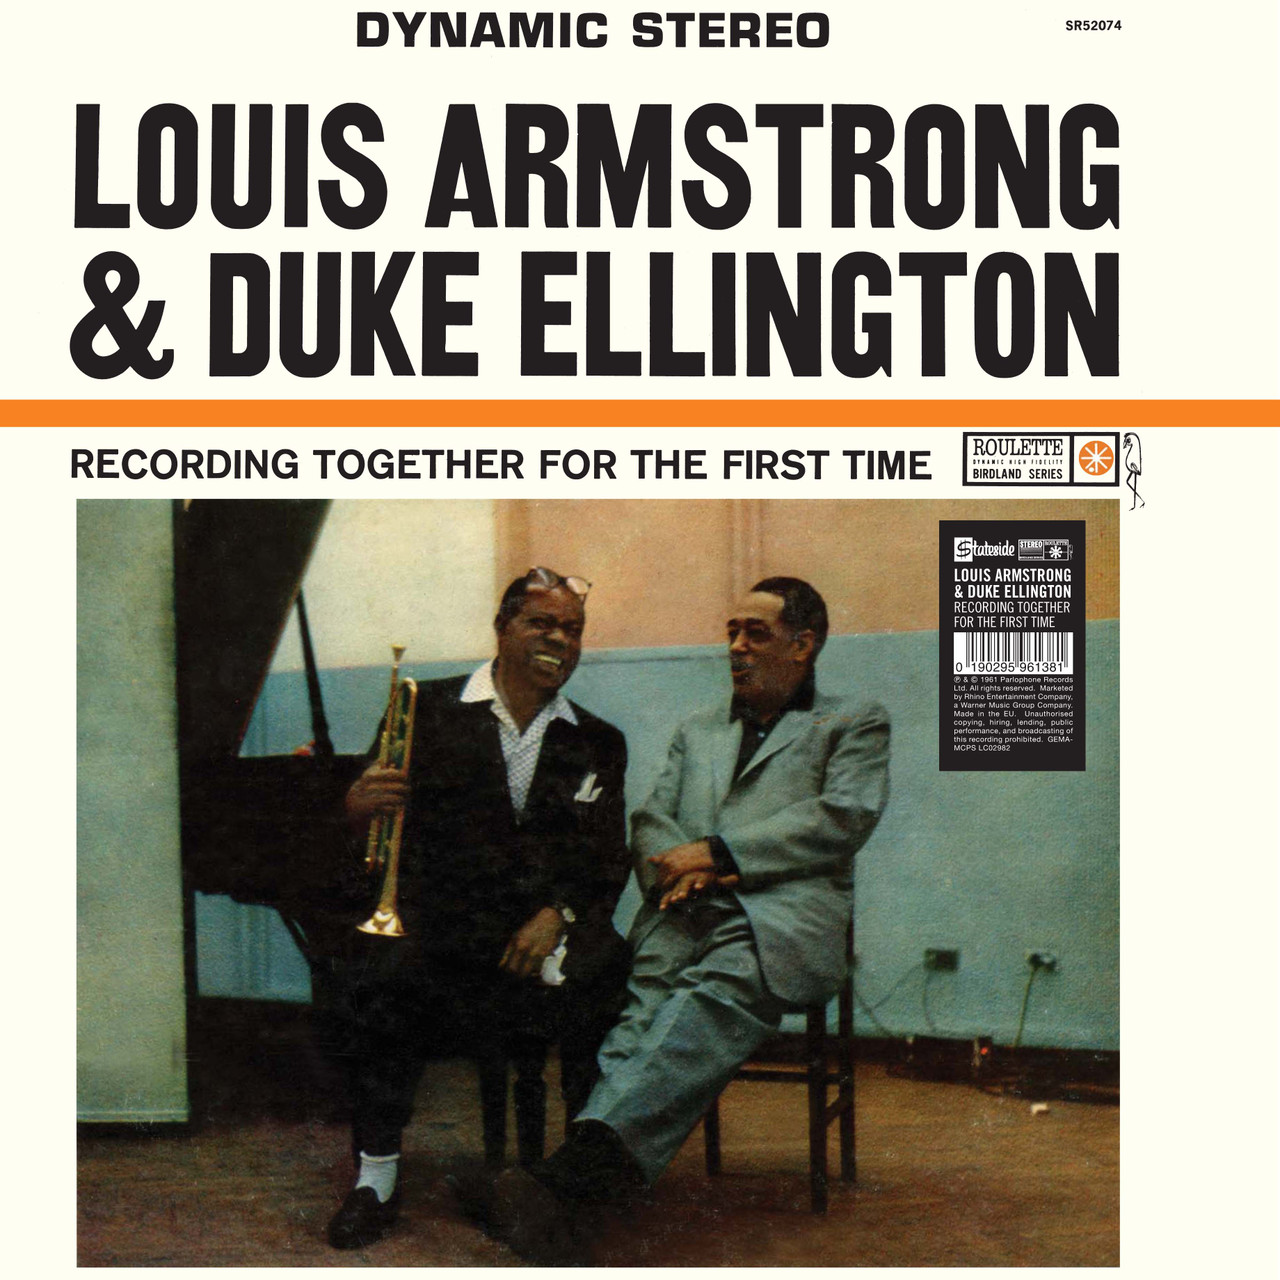 [ Audio Fidelity LP Vinyl] Louis Armstrong